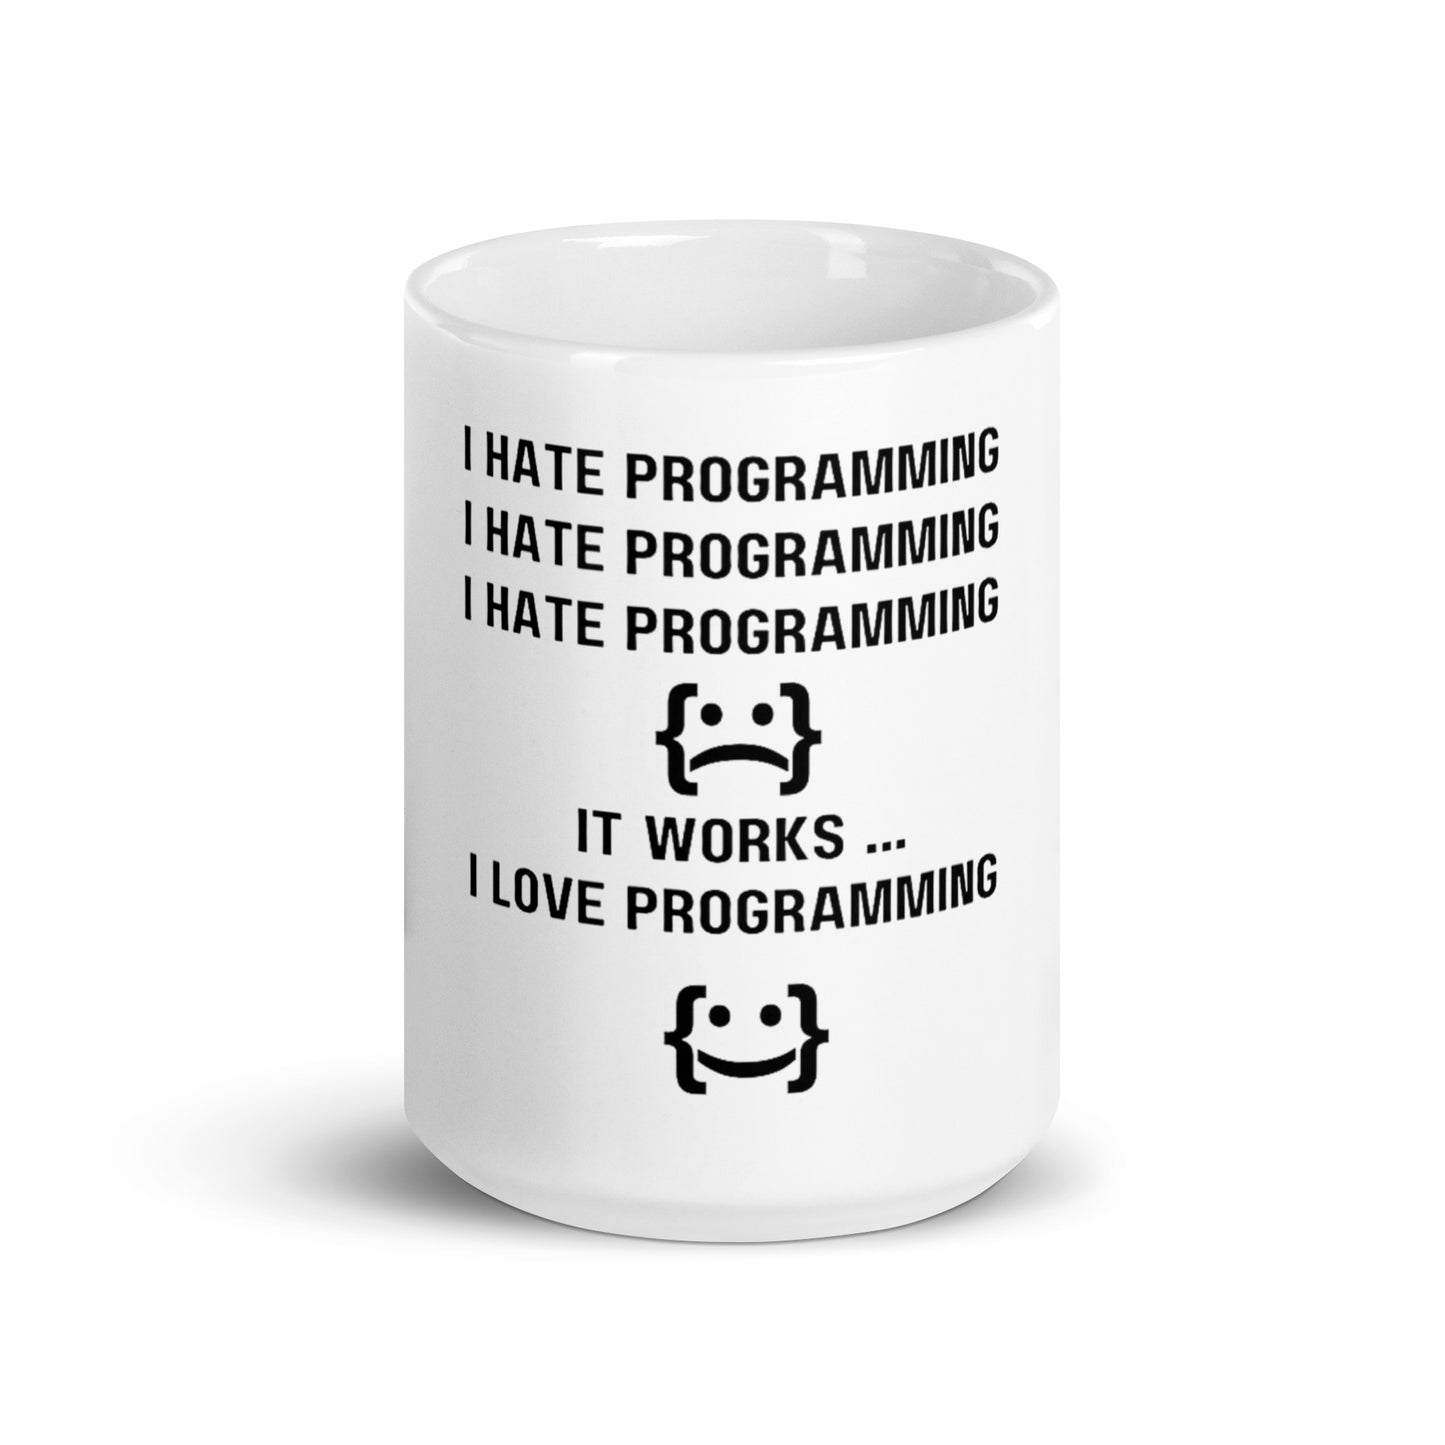 Hate Programming mug